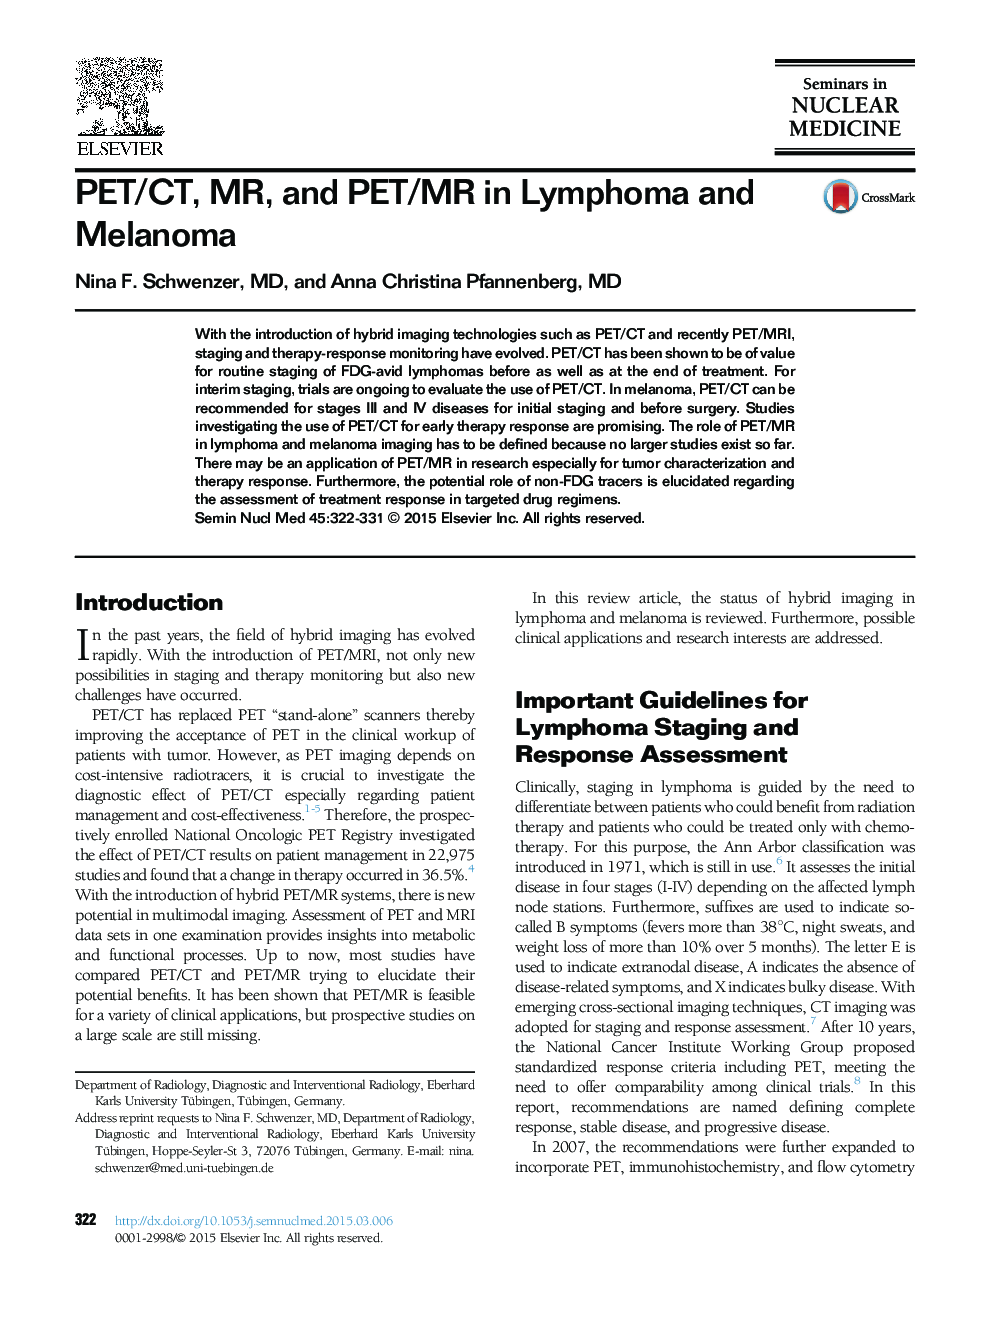 PET/CT, MR, and PET/MR in Lymphoma and Melanoma